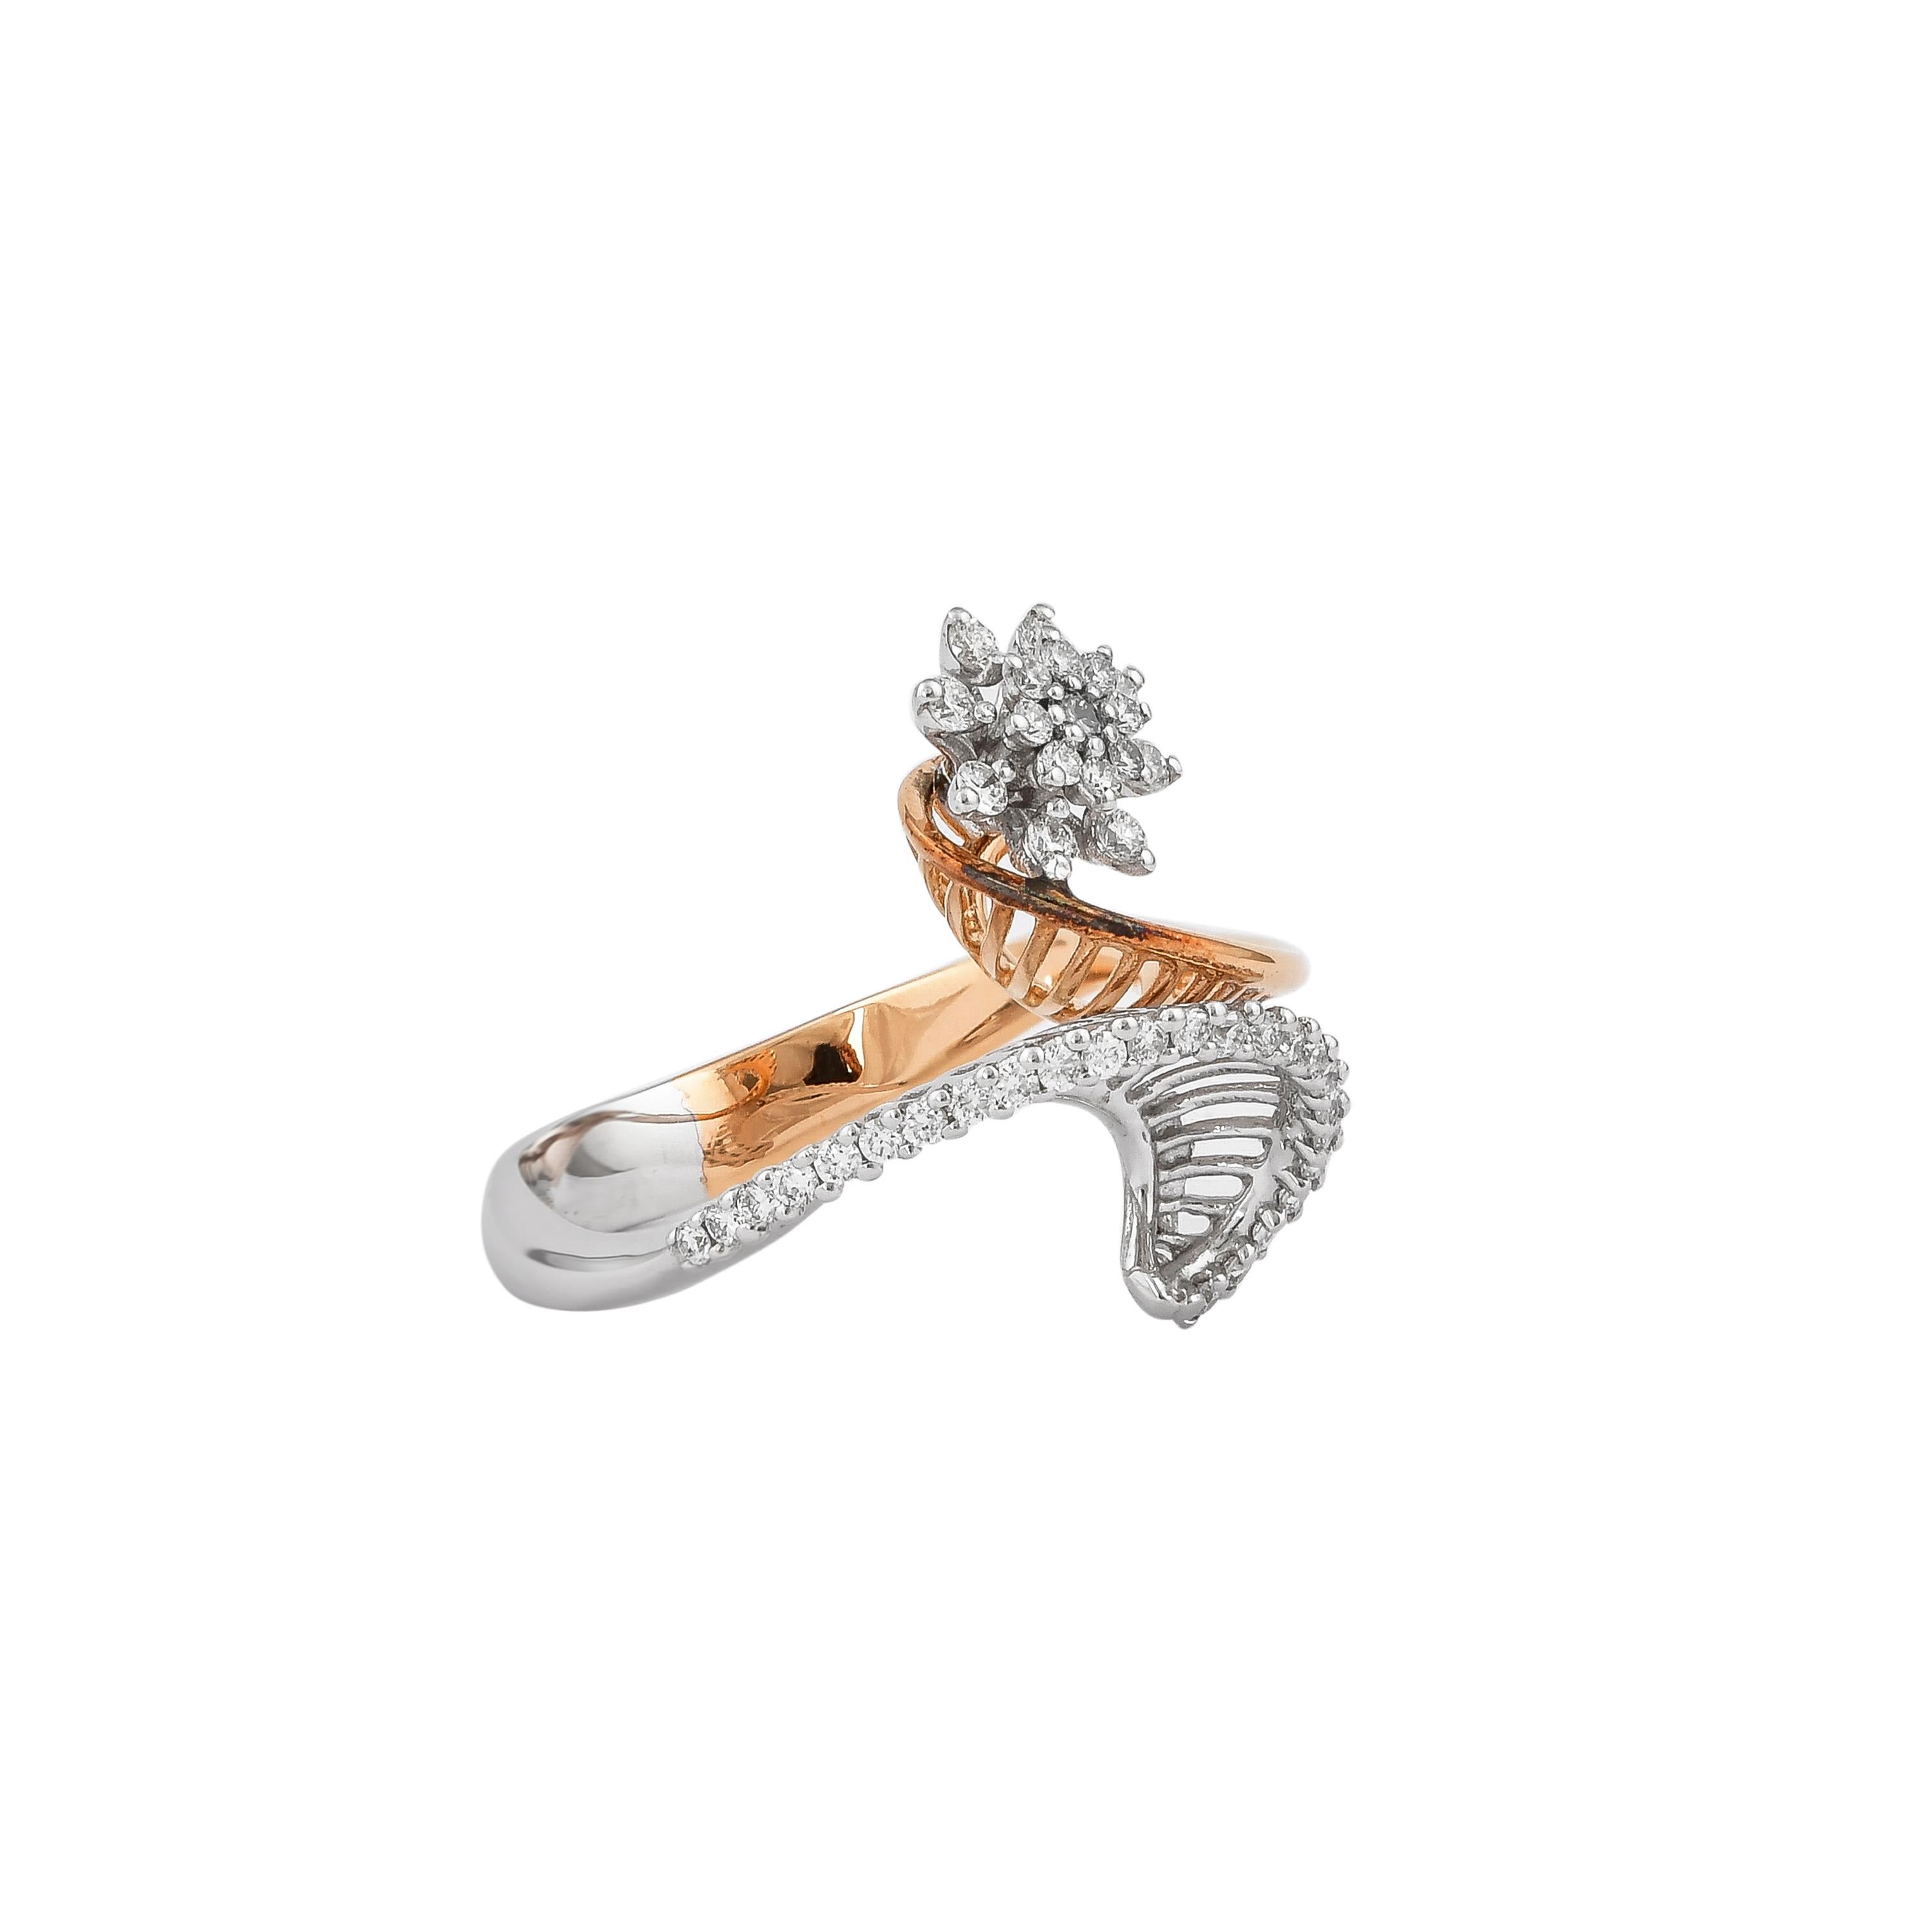 Unique and Designer Cocktail Rings by Sunita Nahata Fine Design.

Classic Diamond ring in 18K White & Rose gold. 

Diamond: 0.026 carat, 1.90mm size, round shape, G colour, VS clarity.
Diamond: 0.125 carat, 1.50mm size, round shape, G colour, VS